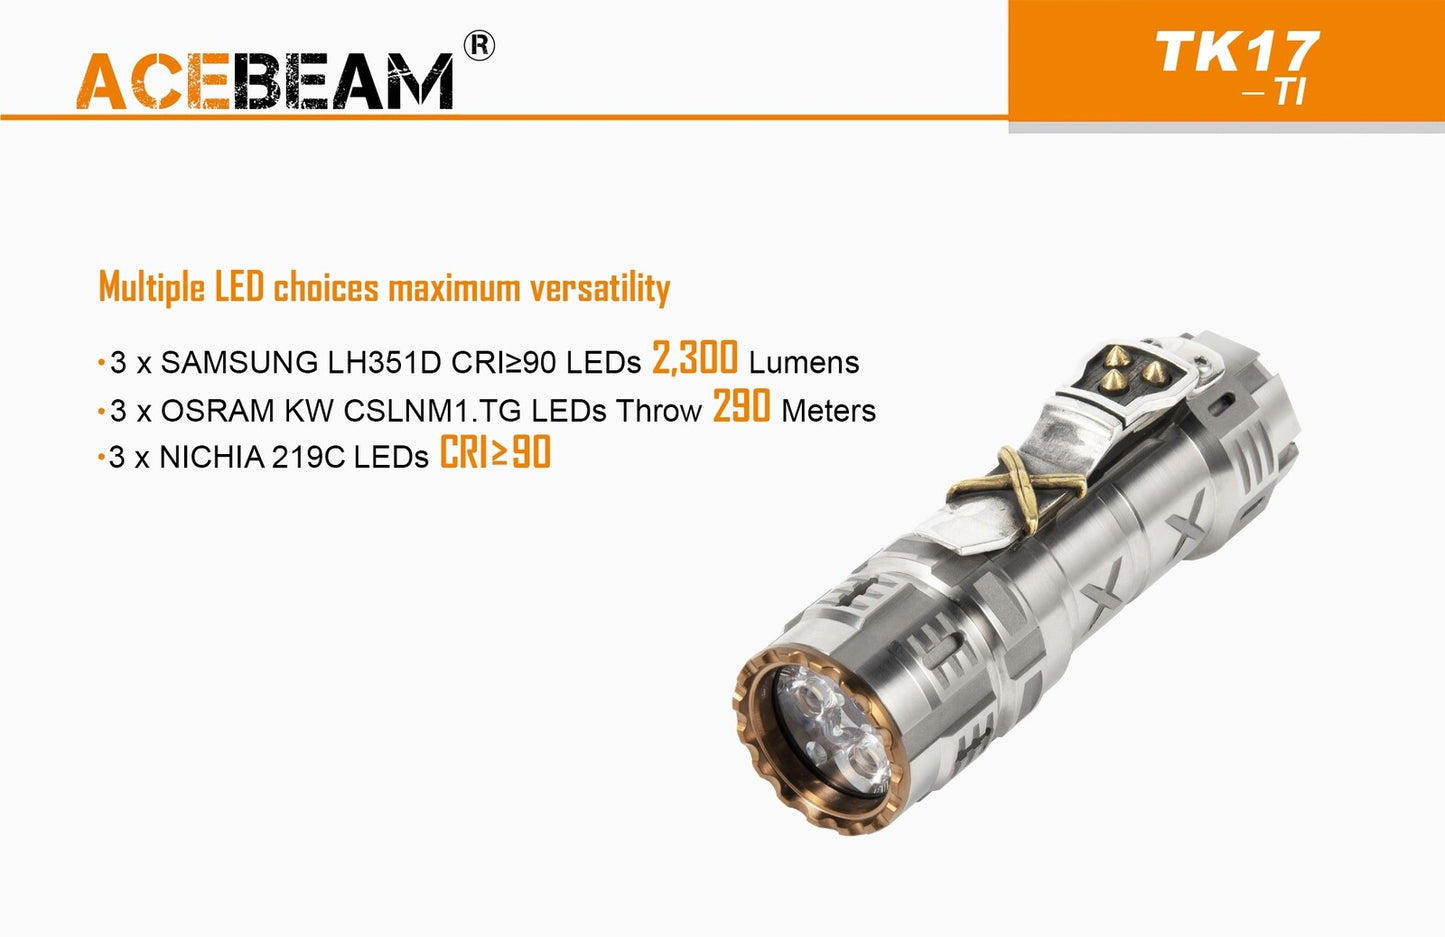 Acebeam Acebeam Compact Versatile Edc Torch - Limited Edition 2300 Lumen #tk17-Ti Gray